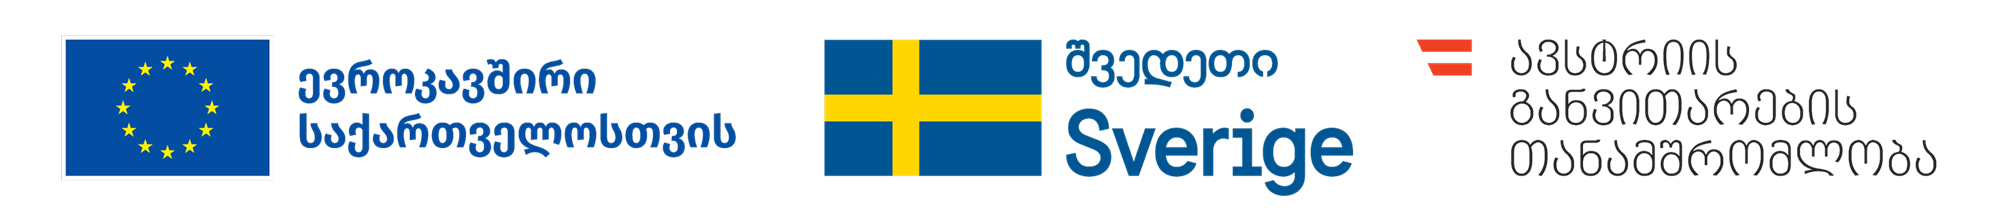 Greta-logo